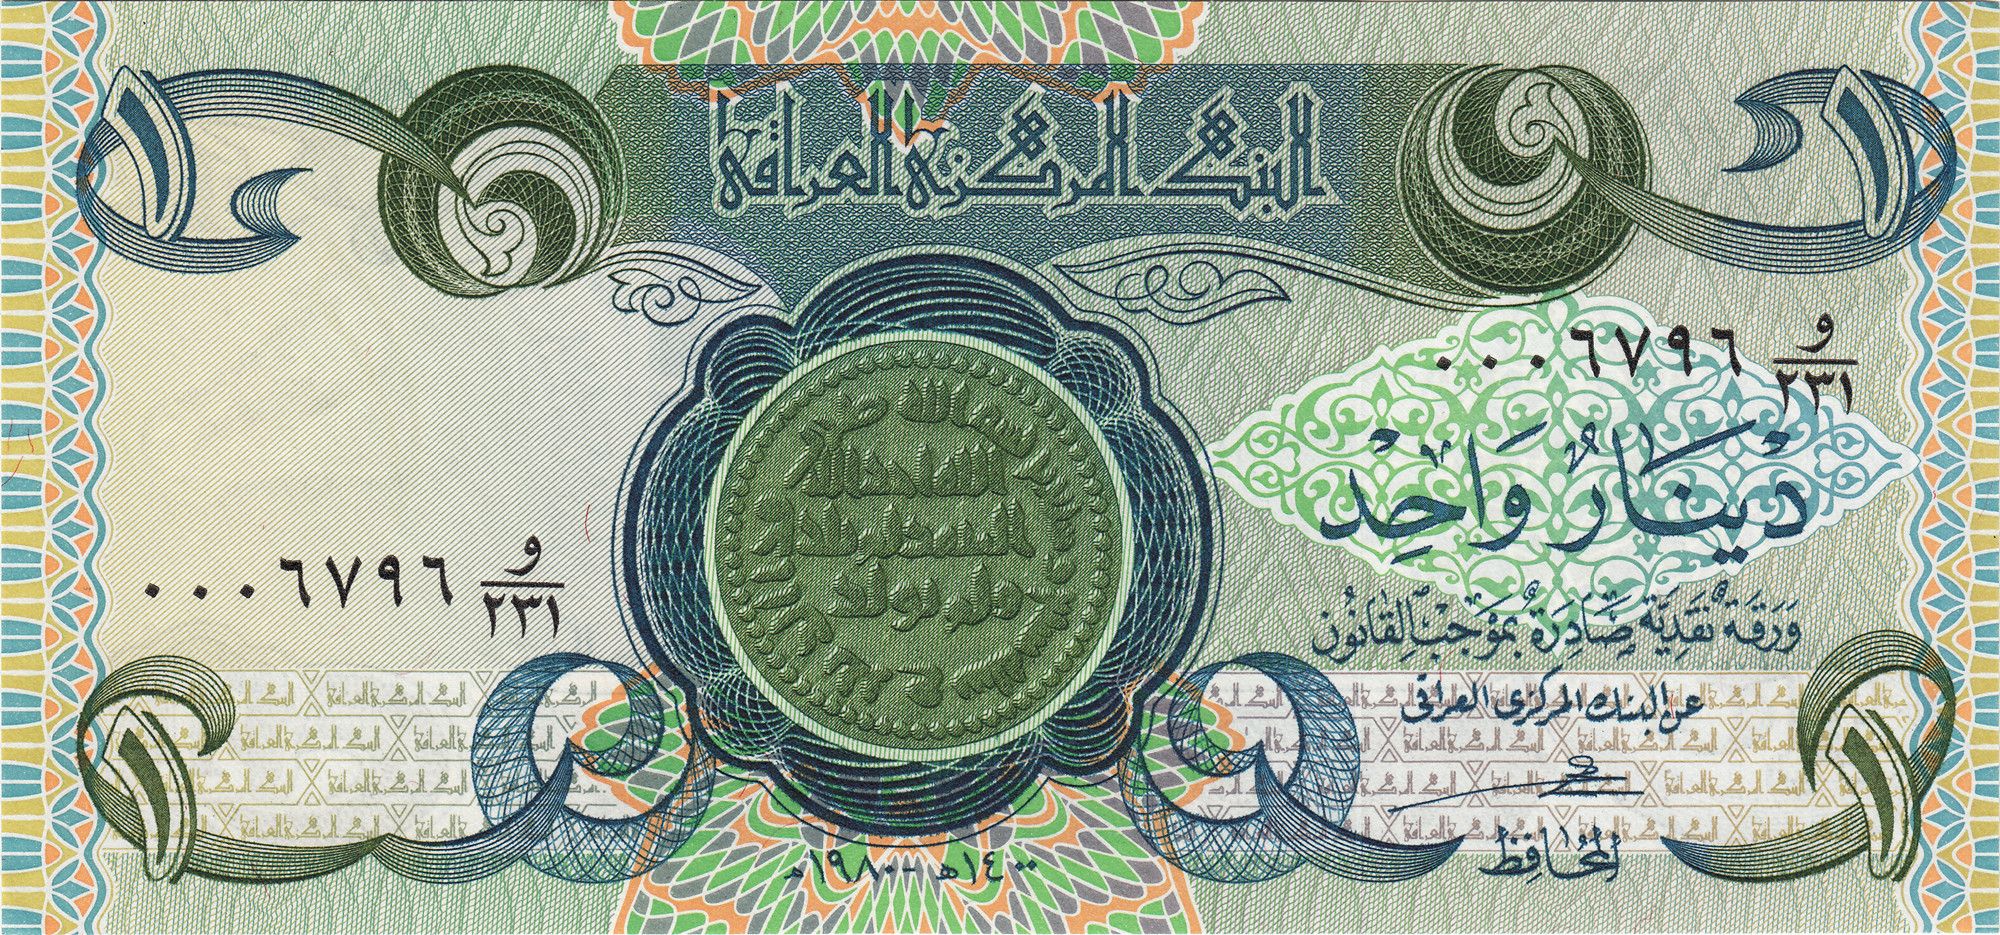 5000 Iraki Dinar (IQD) To Indonesian Rupiah (IDR)